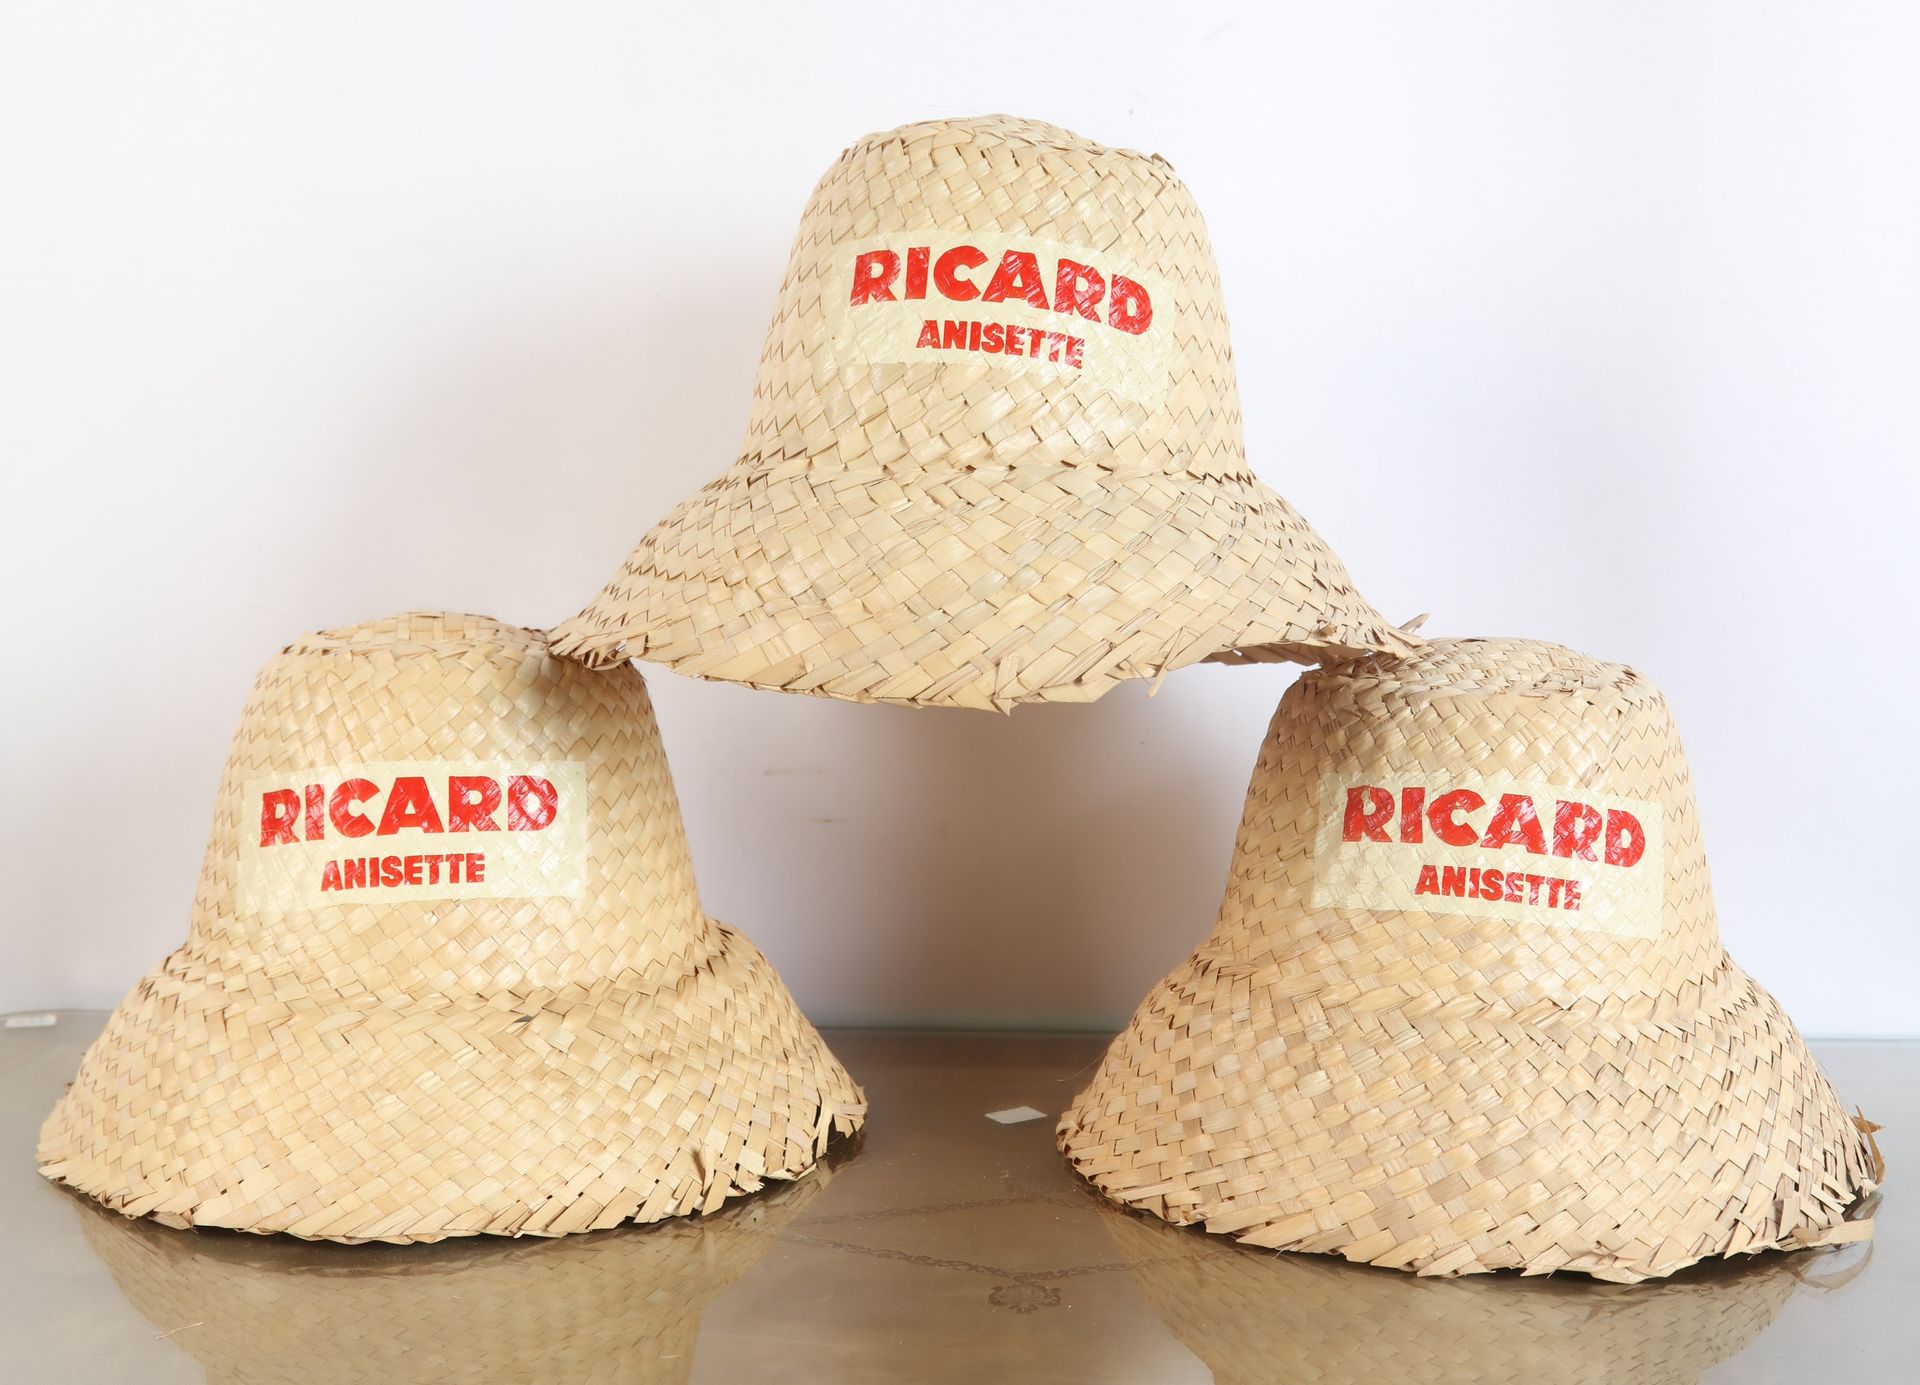 Null 3 sombreros tejidos "Ricard, Anisette", ropa, toalla, disco de 45 rpm...Pub&hellip;